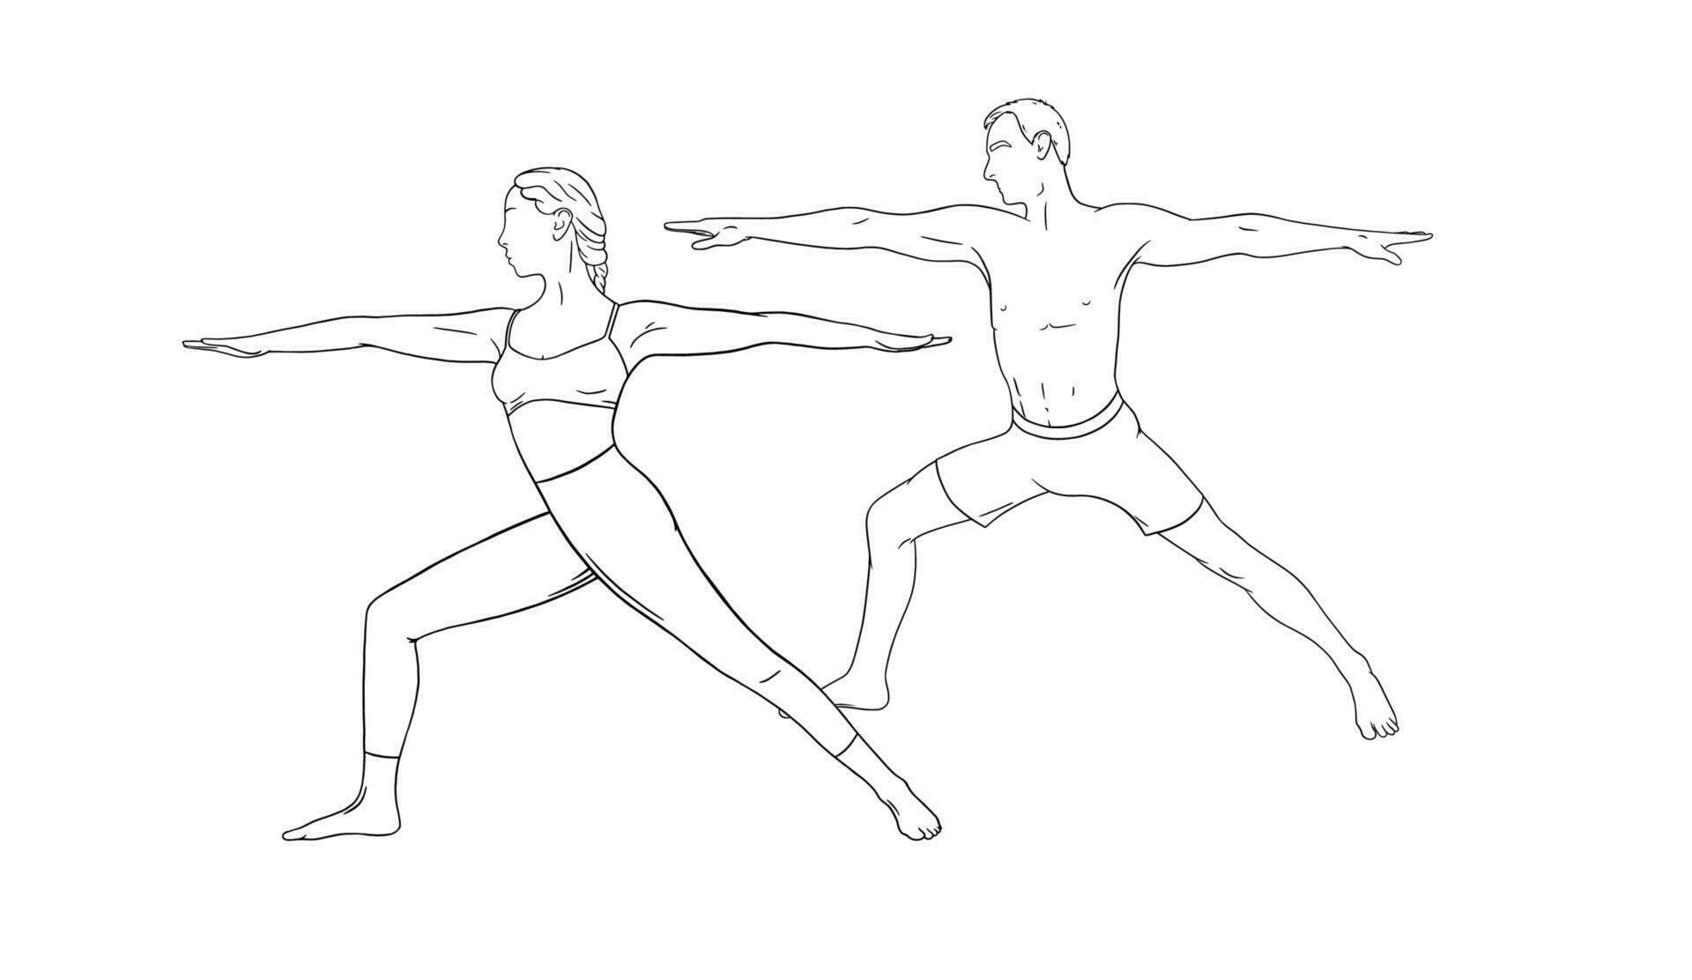 Yoga warrior asana or virabhadrasana I. Woman and man couple practicing yoga asana. Hand drawn vector illustration